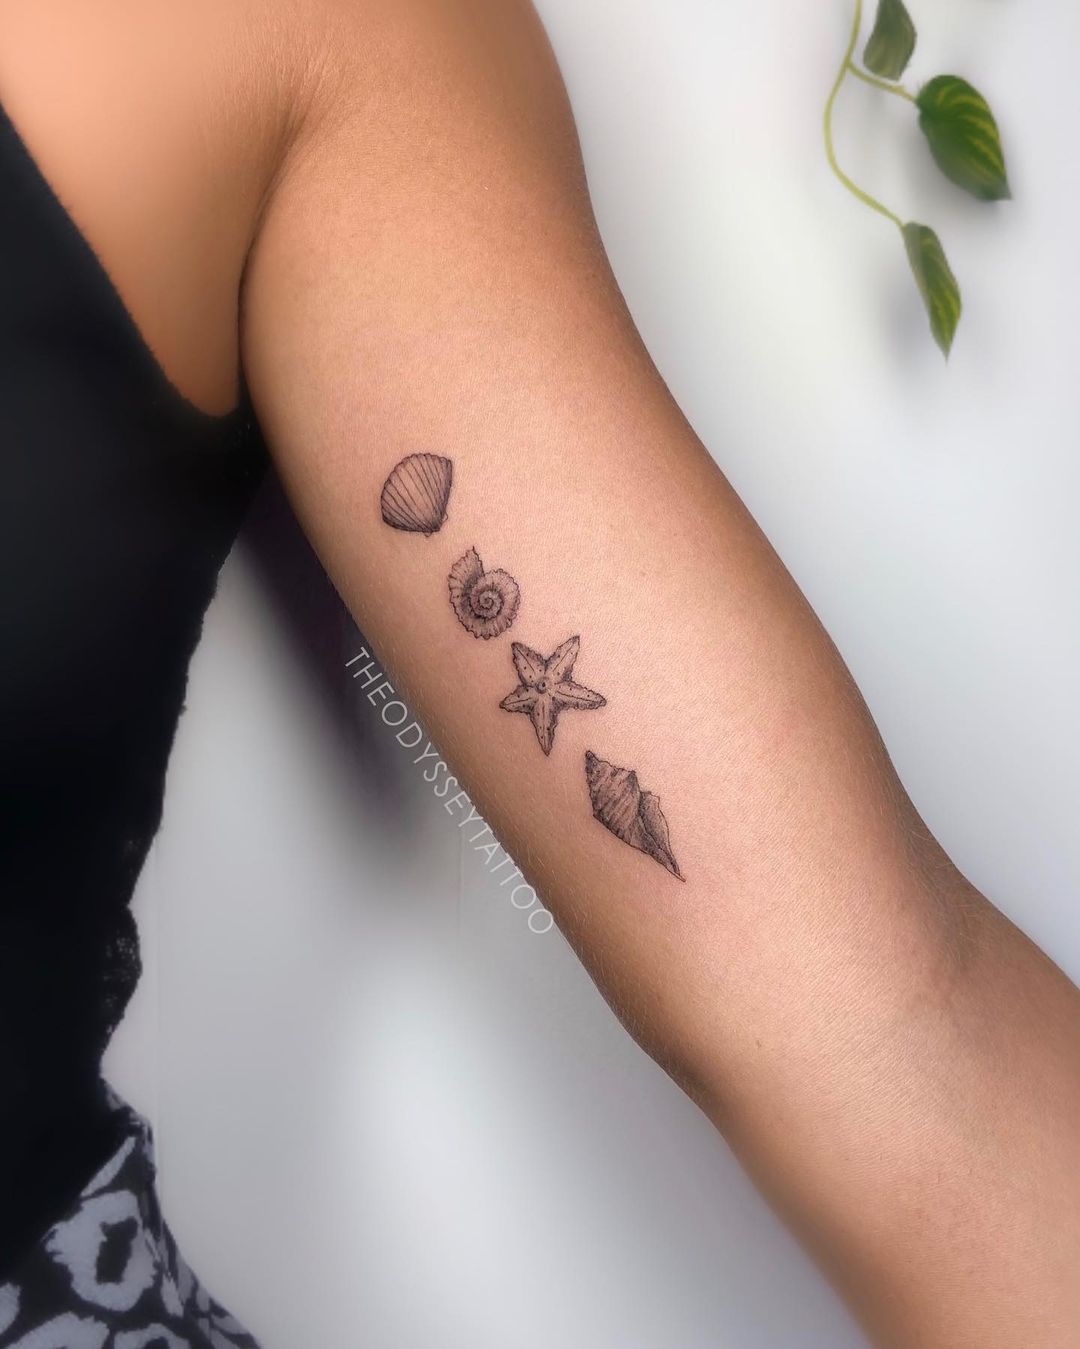 Hand Tattoos For Women